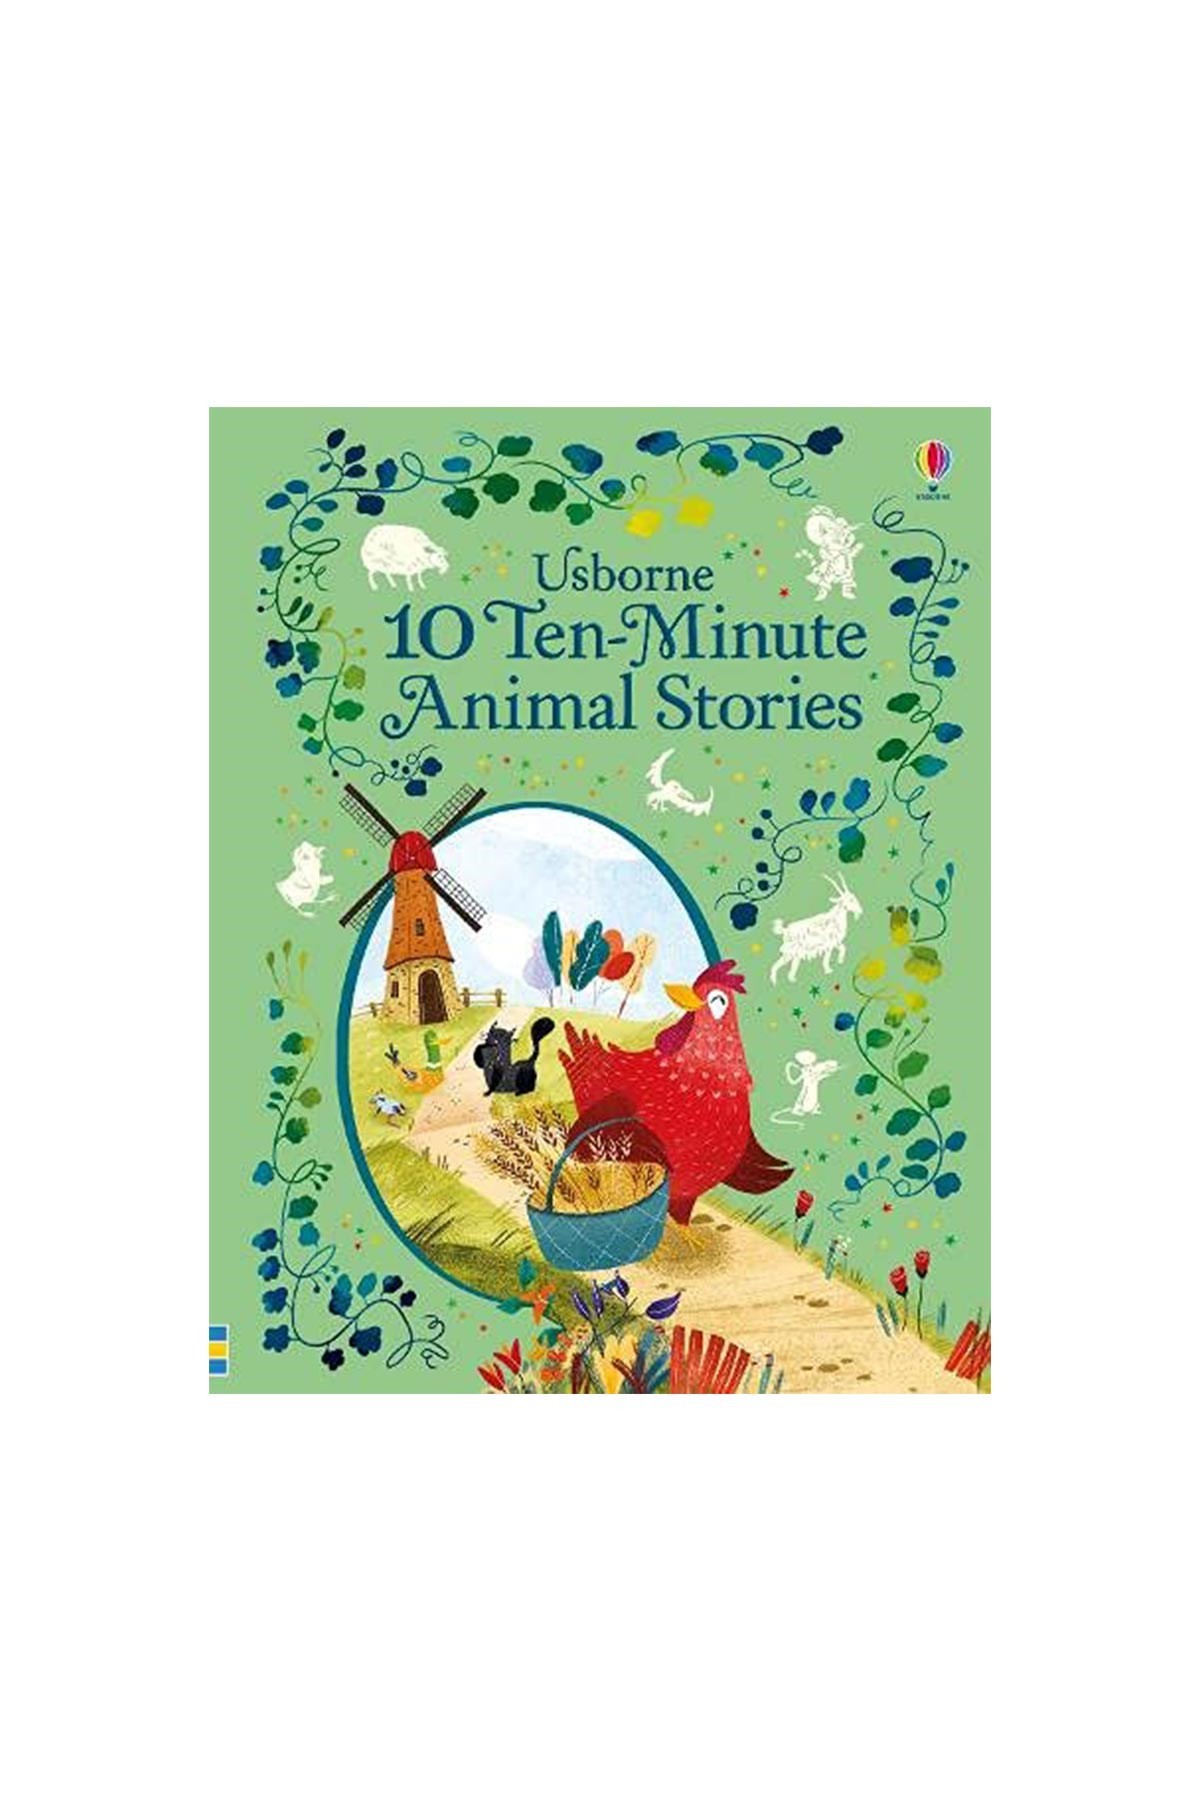 The Usborne 10 Ten Minute Animal Stories